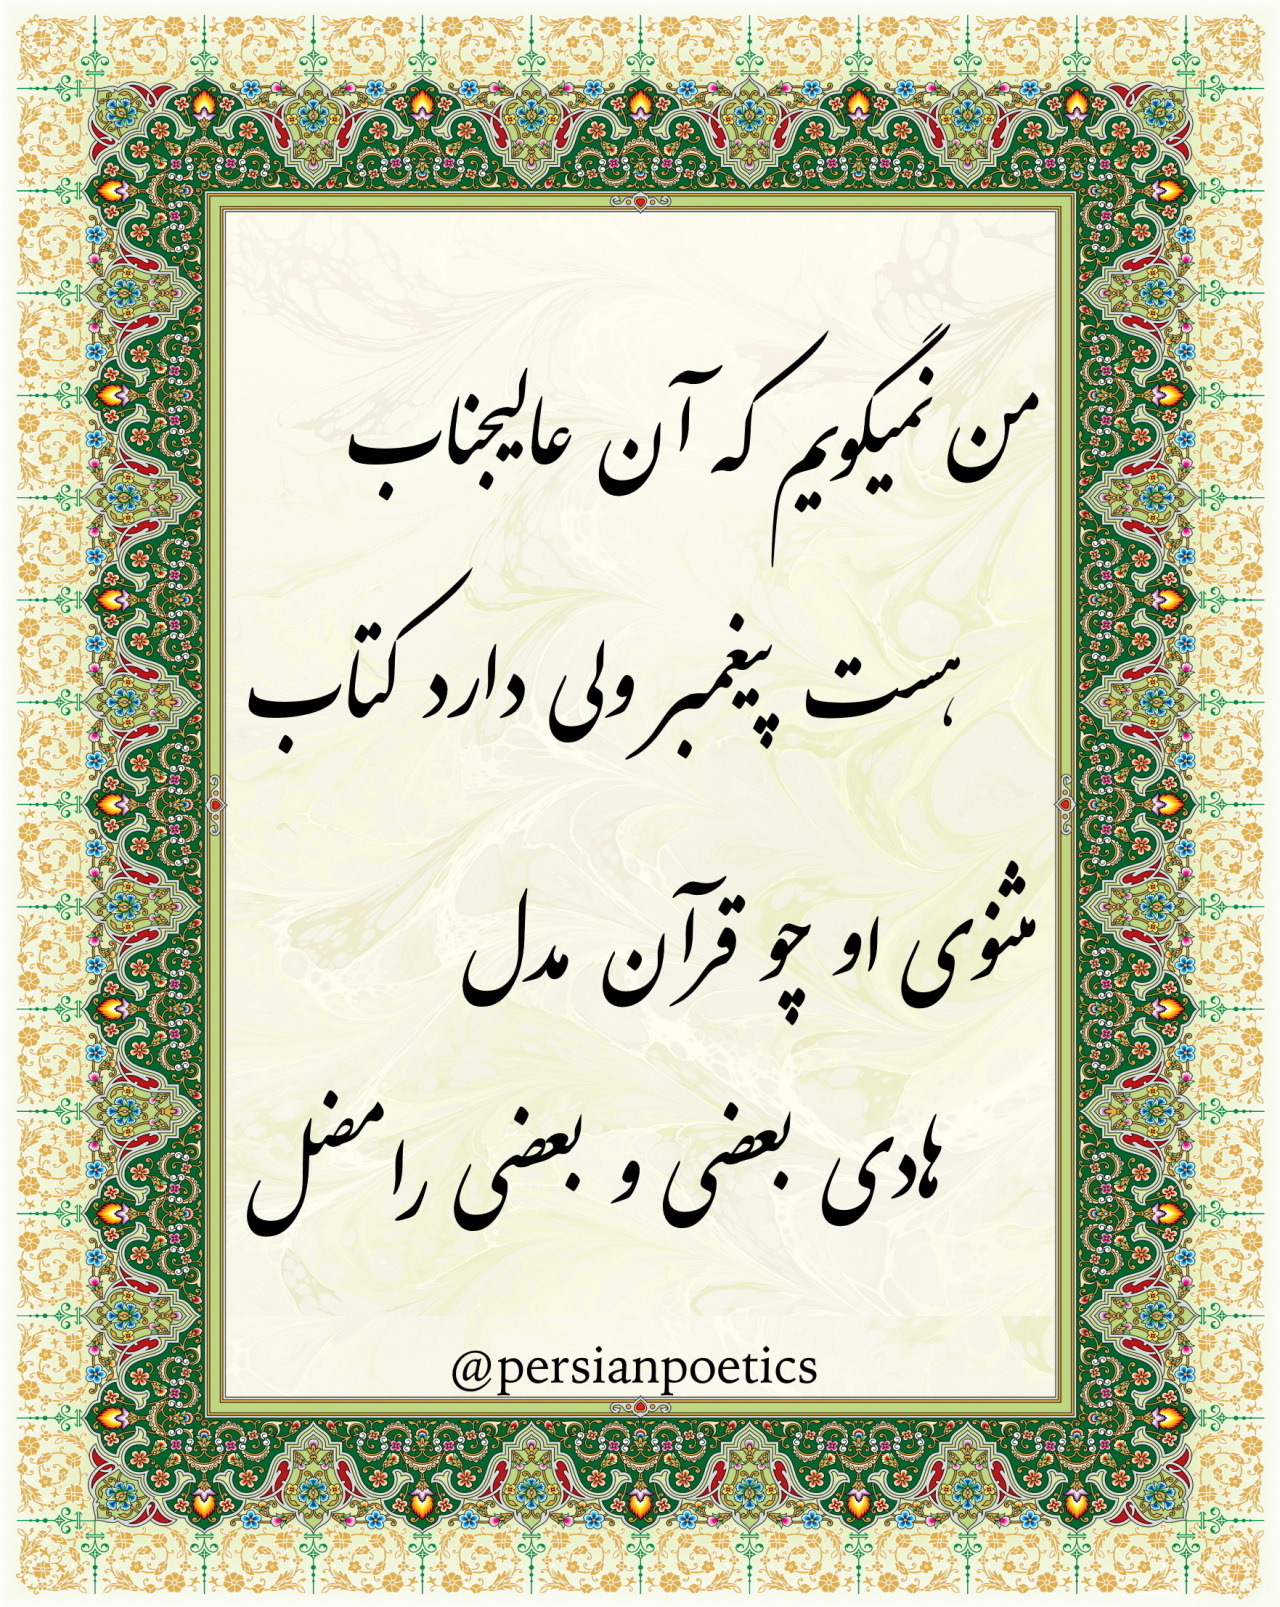 Moulana Muhammad Jalaluddin Rumi, rumi,Muhammad Jalaluddin Rumi,persian poetry,poetry,english translation